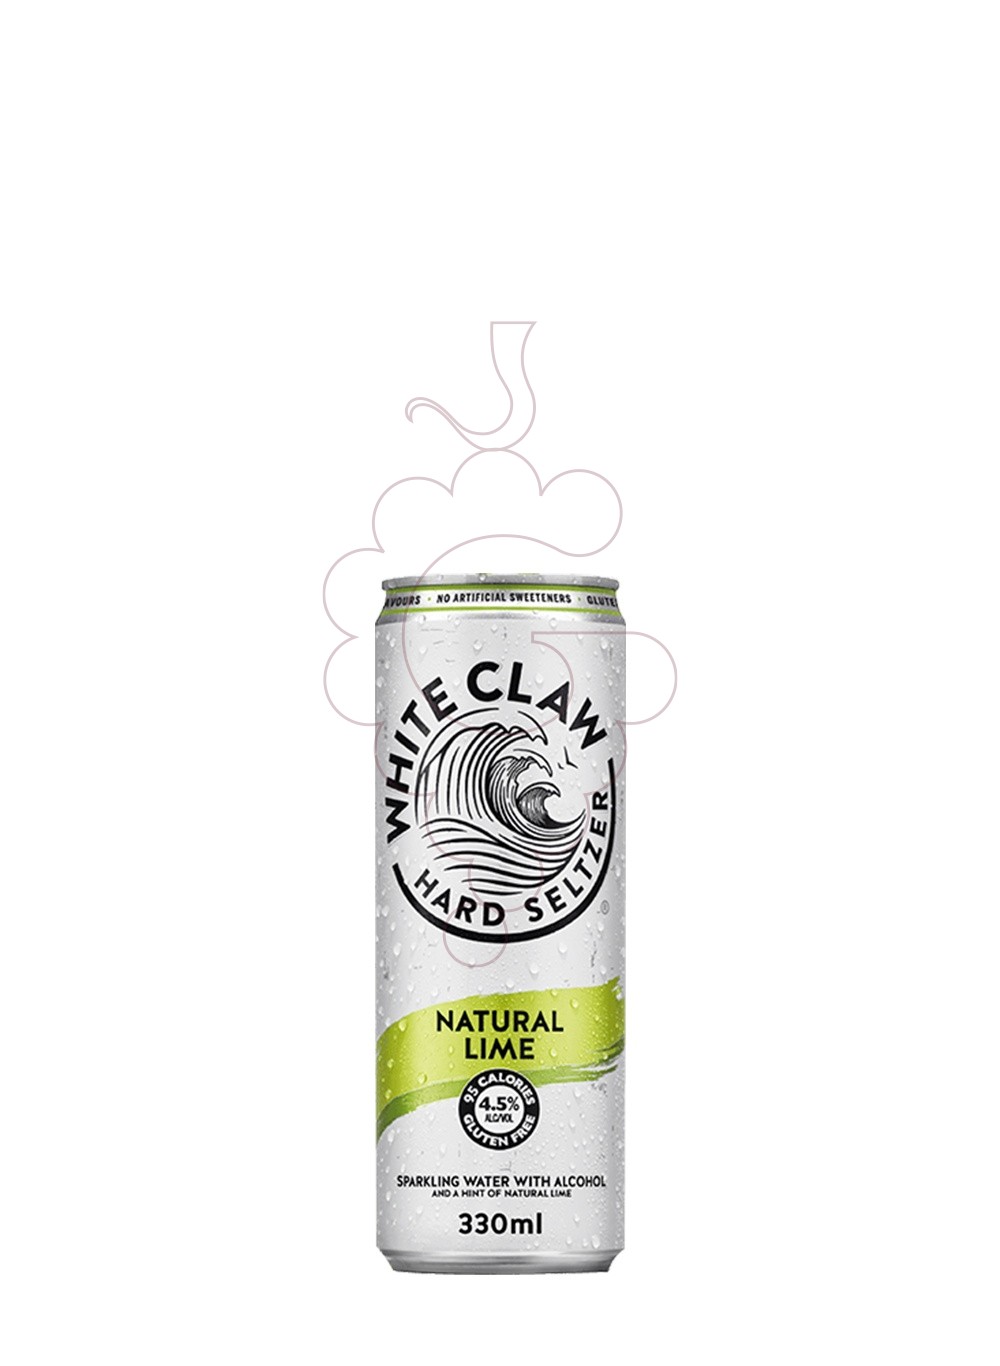 Foto Licor White claw natural lime llauna